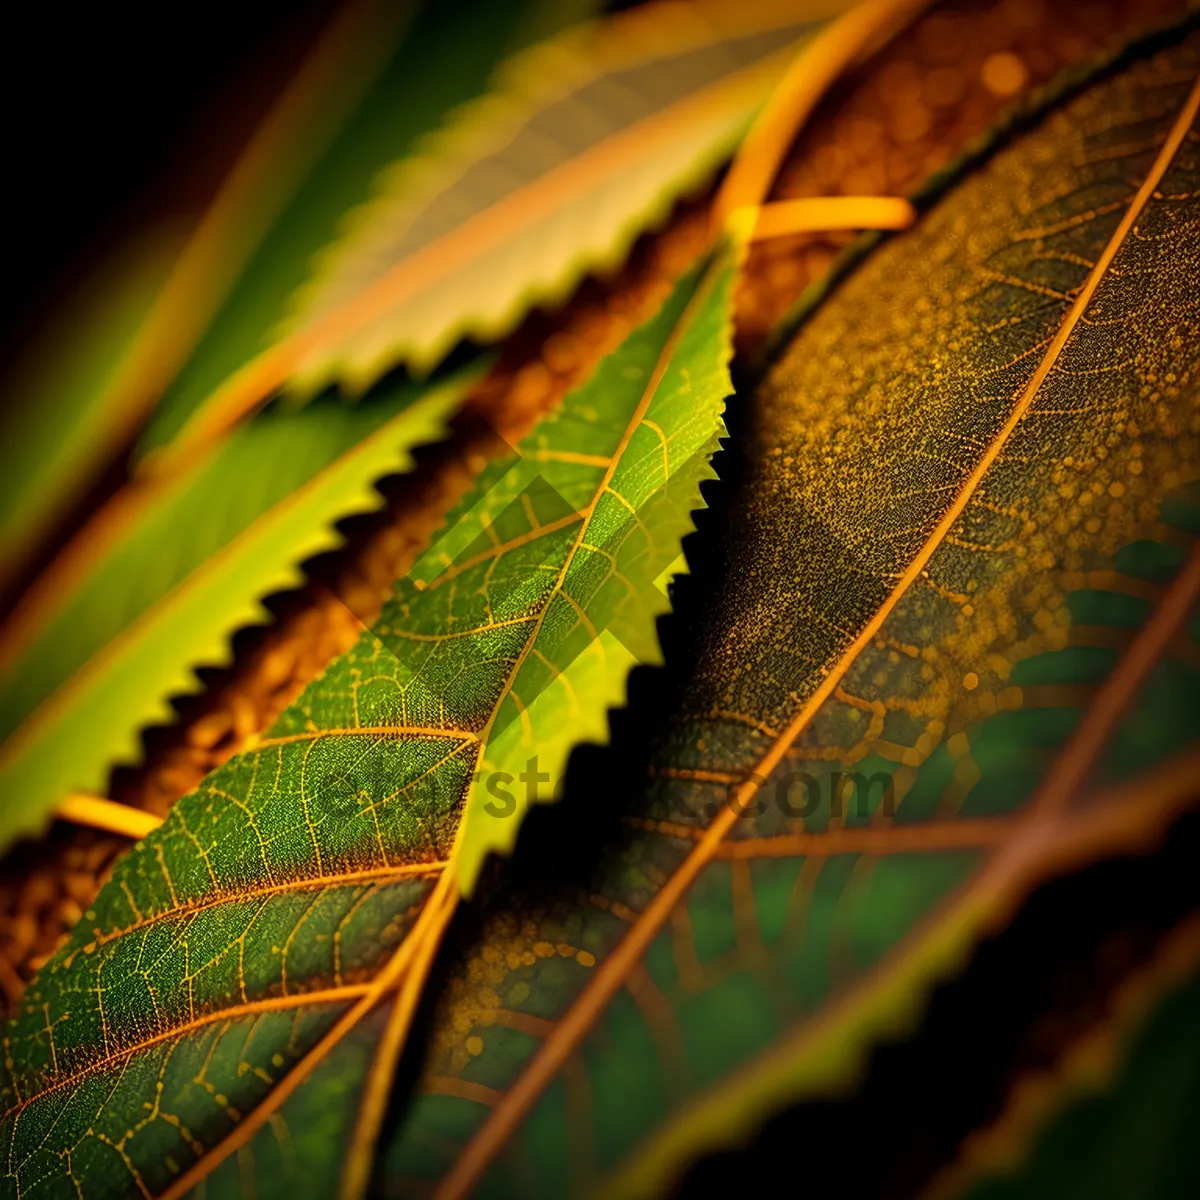 Picture of Vibrant Leaf Pattern on Sumac Shrub